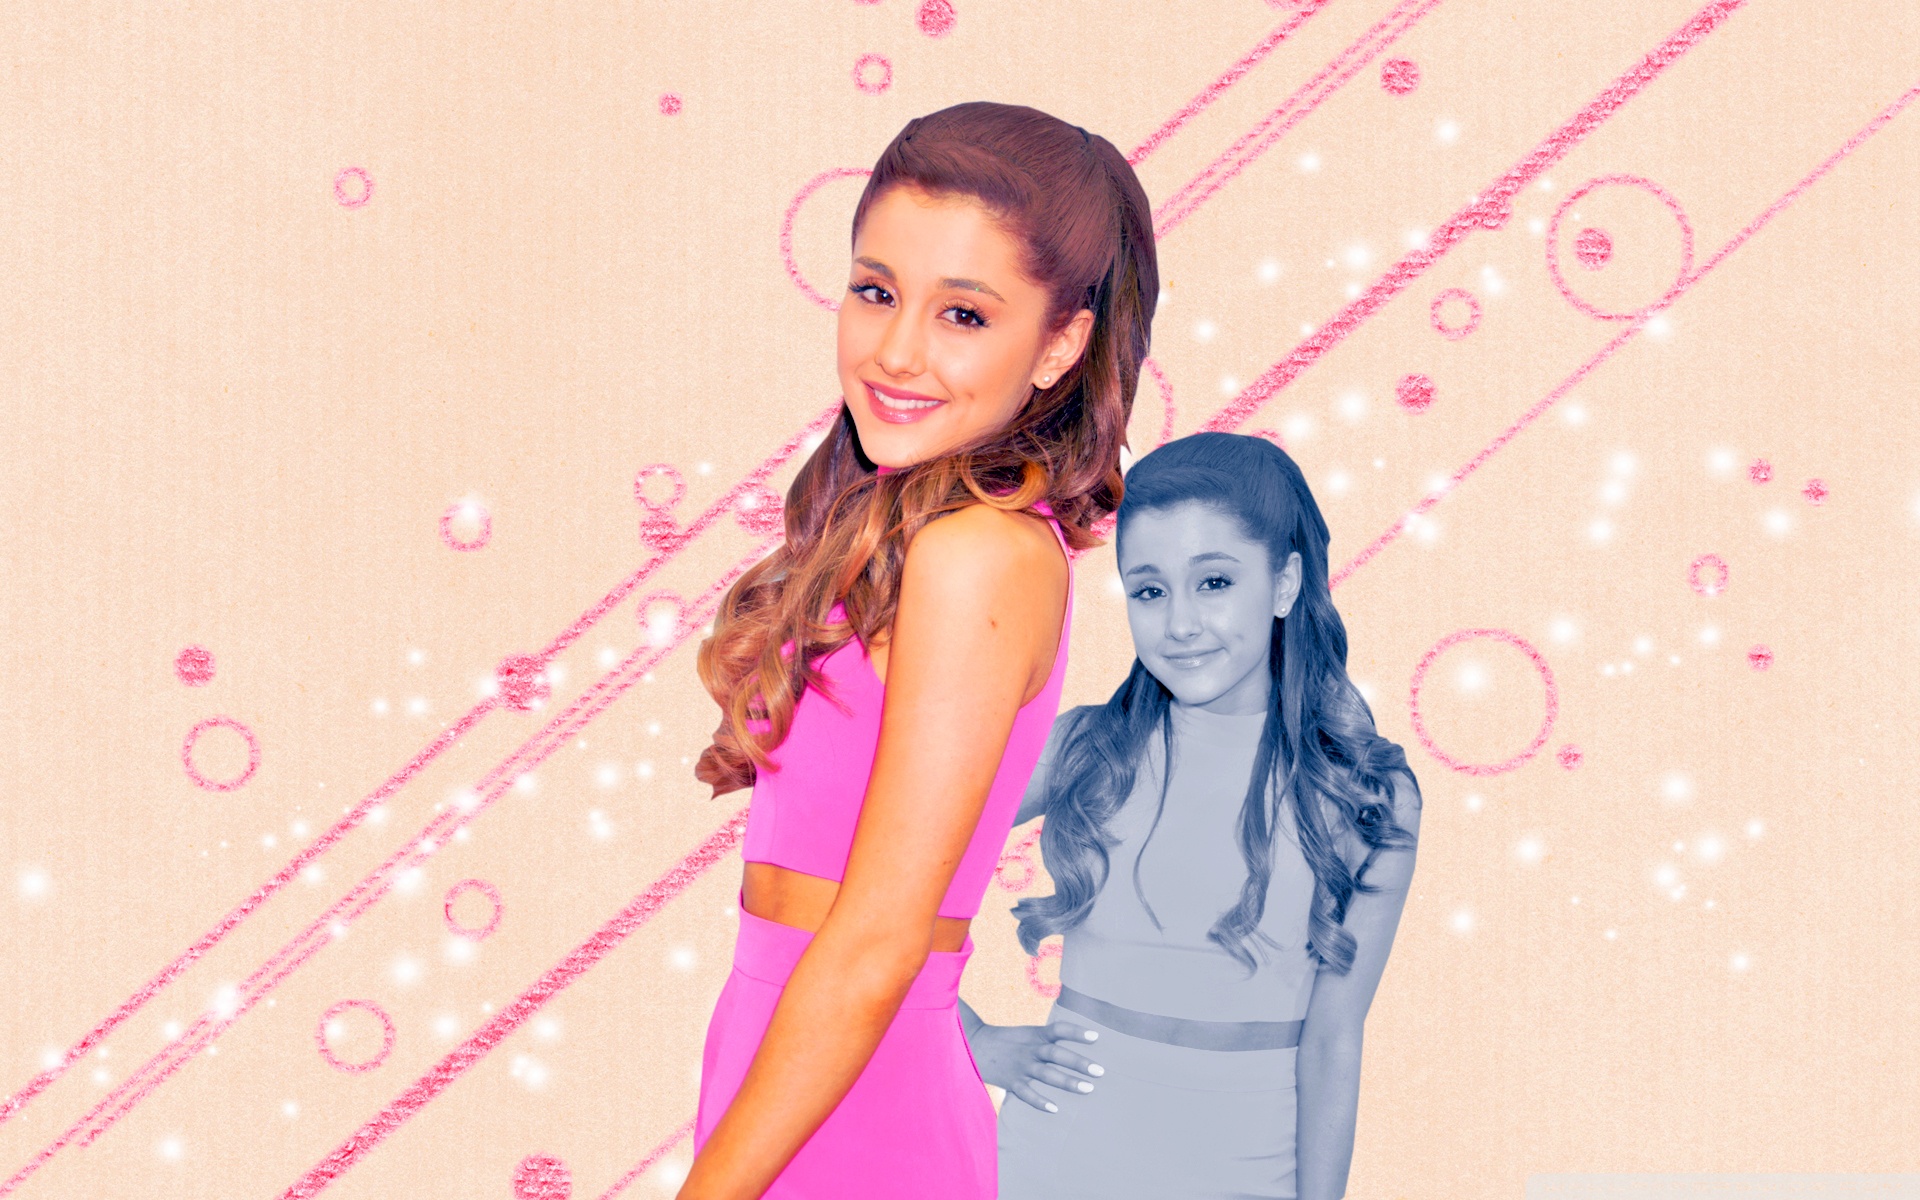 Ariana Grande Ultra HD Desktop Background Wallpaper for : Widescreen ...